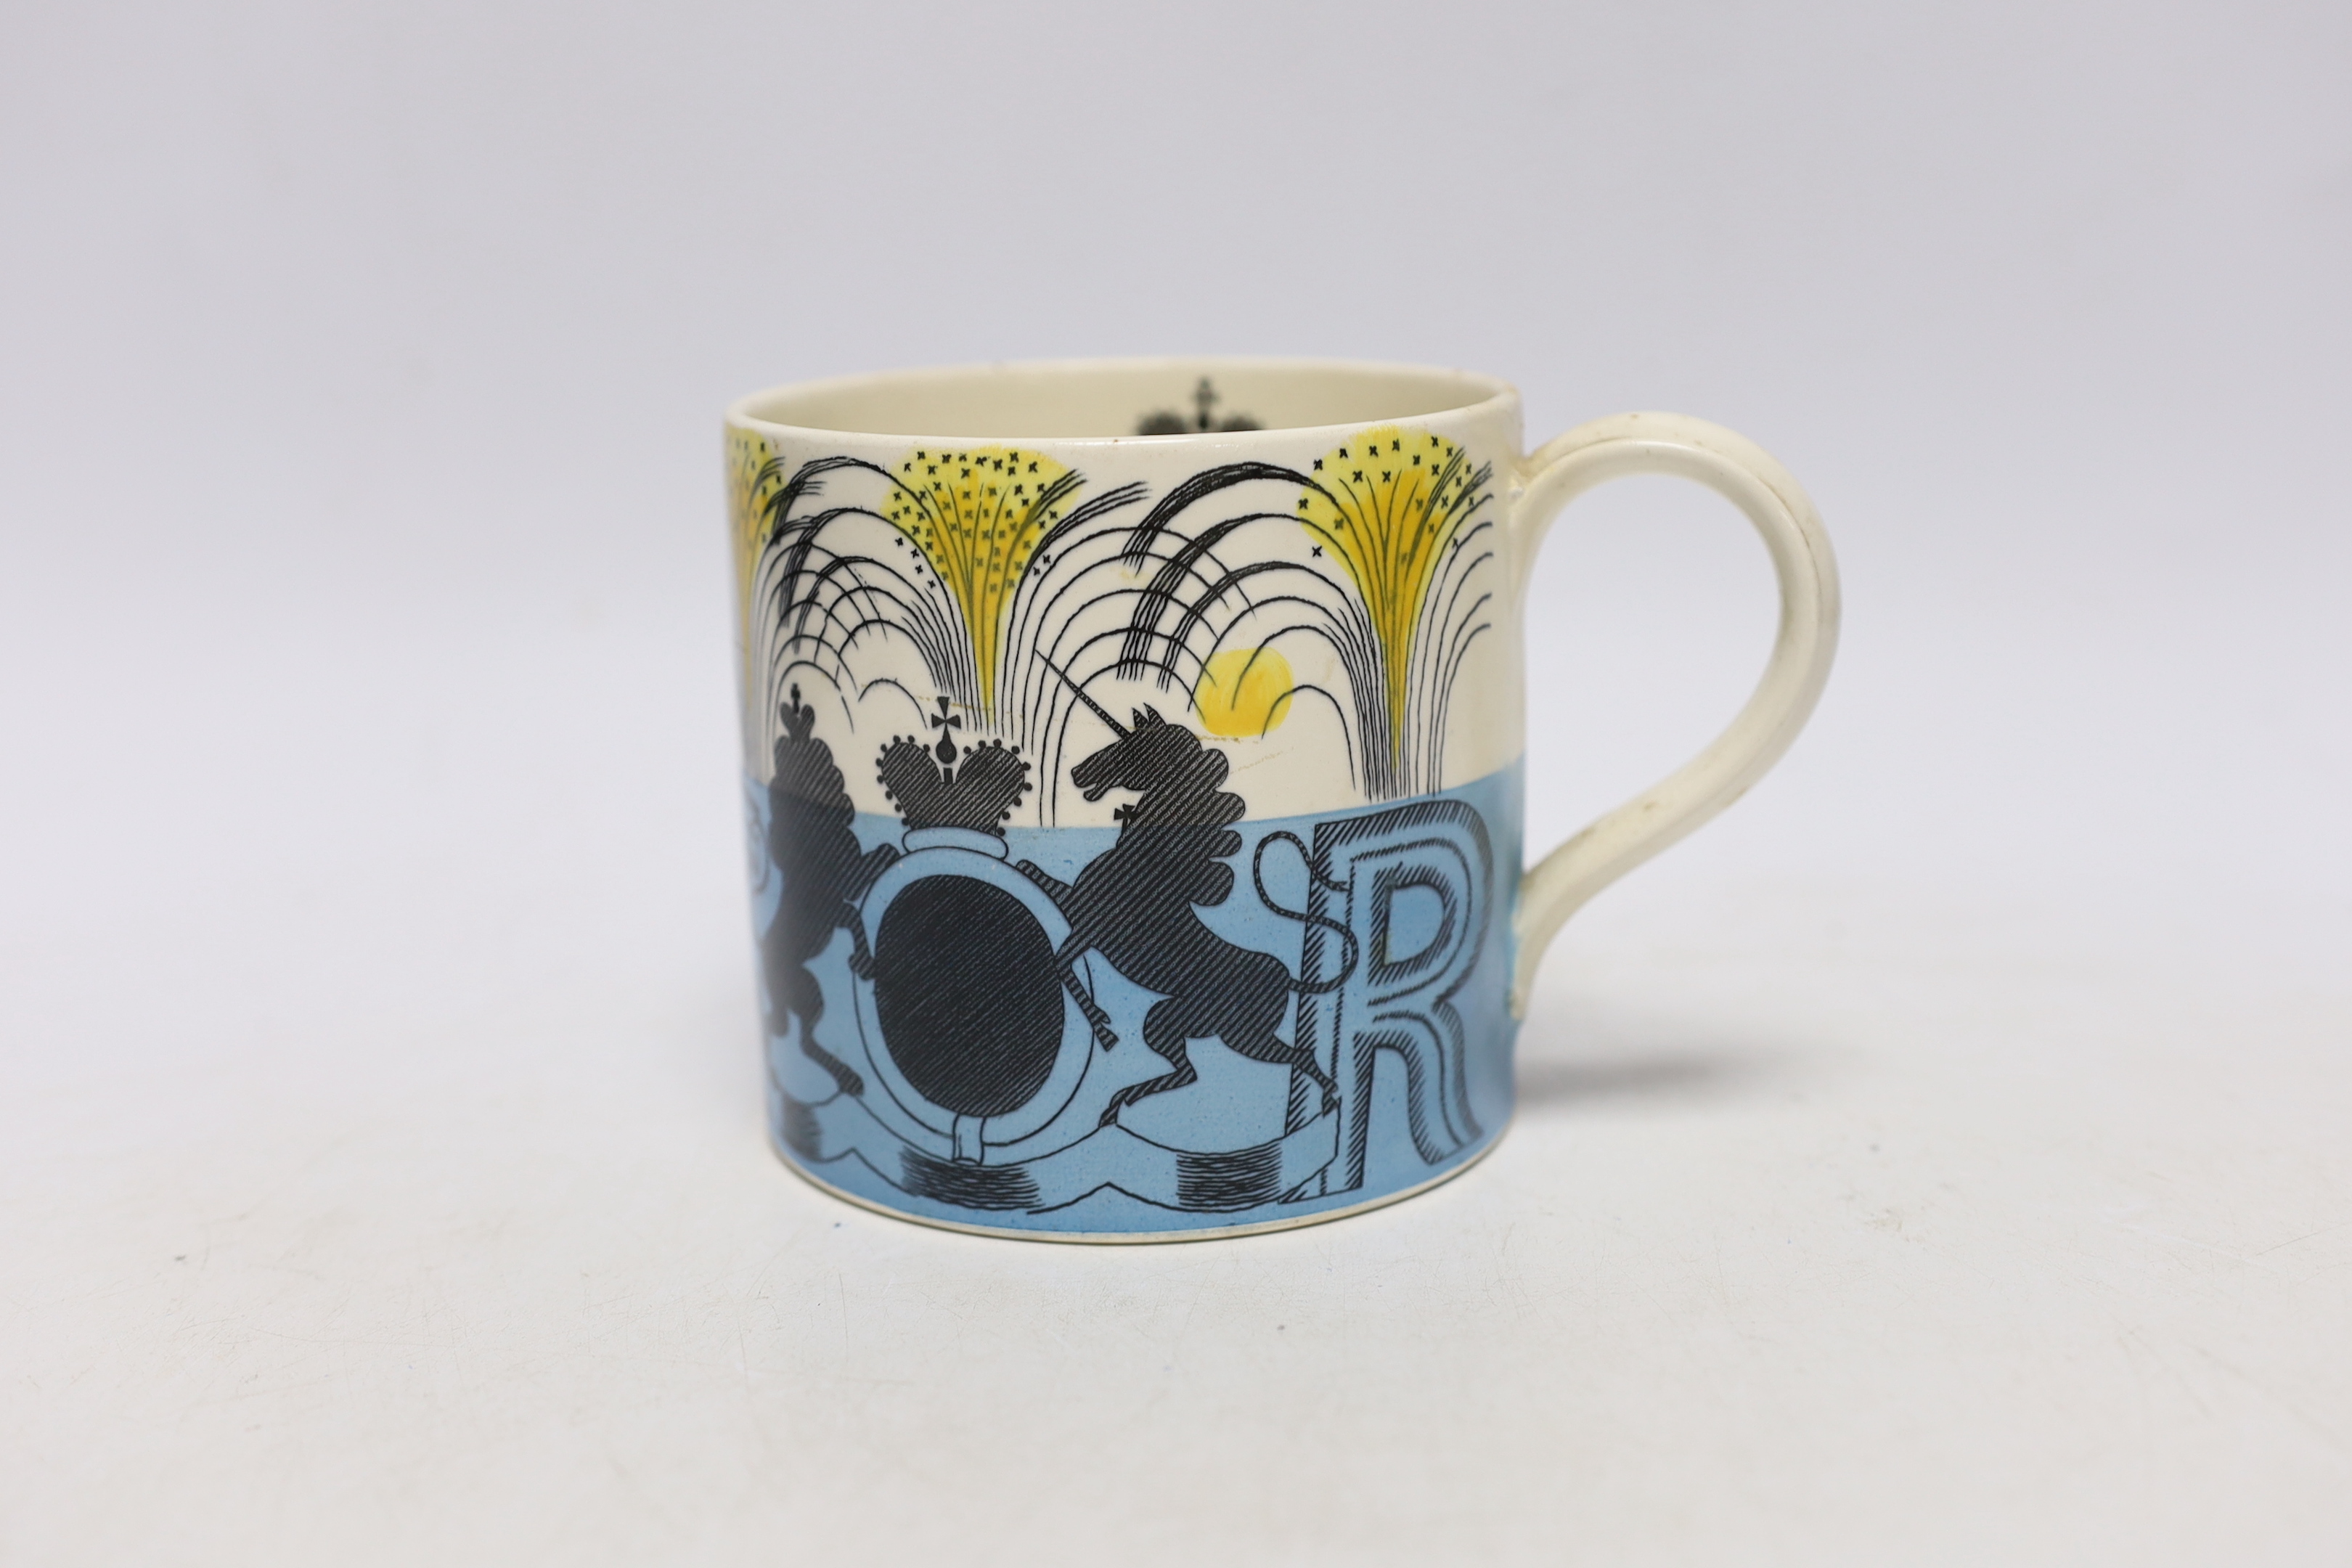 A Wedgwood commemorative mug for George V Coronation by Eric Ravilious, 10.5cm